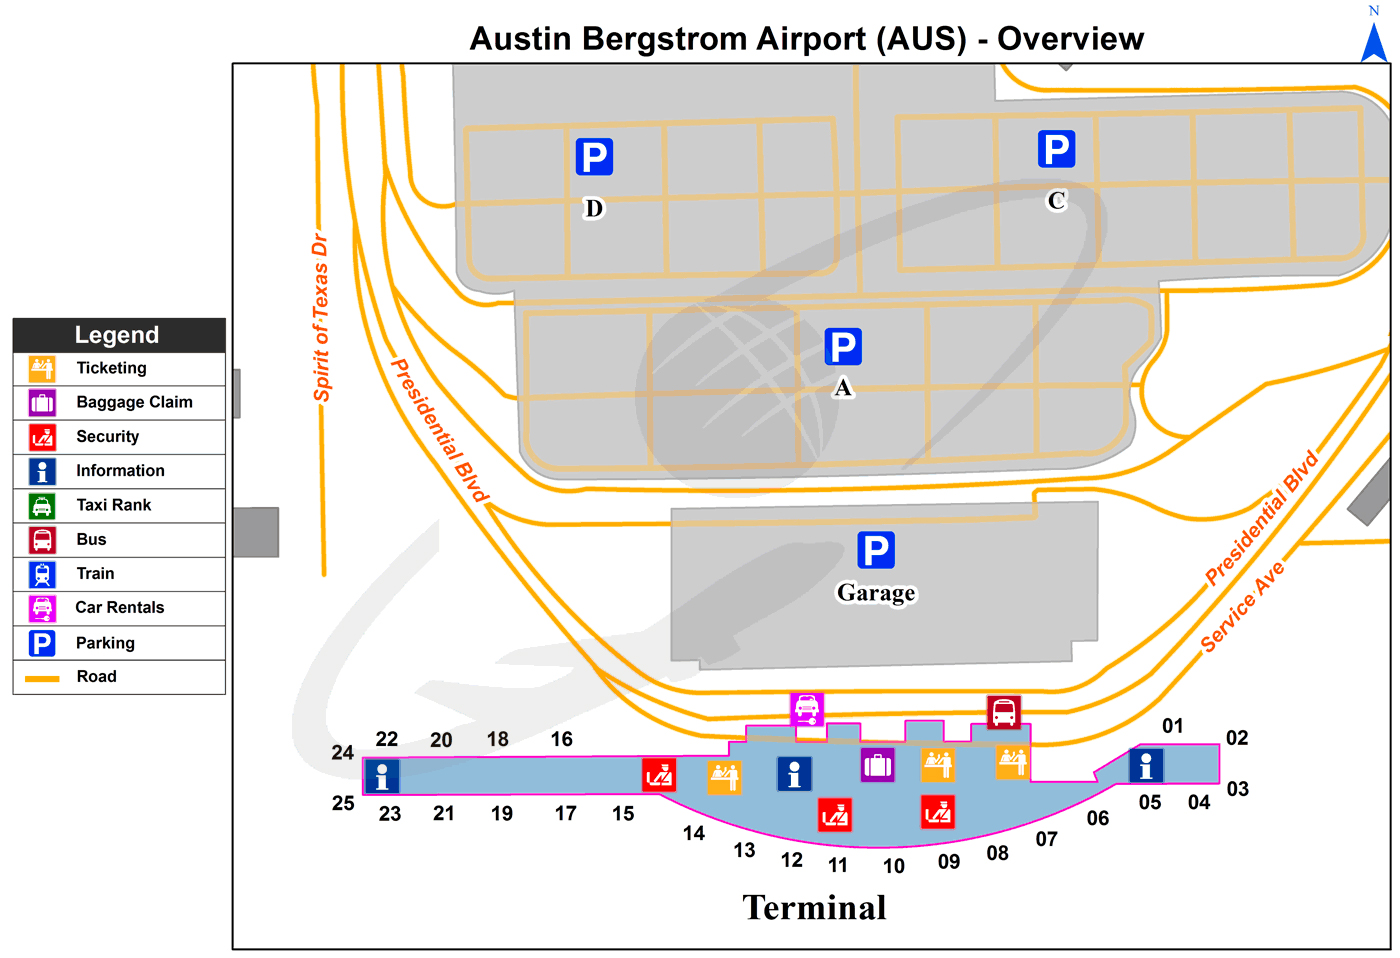 AUS Airport terminal map